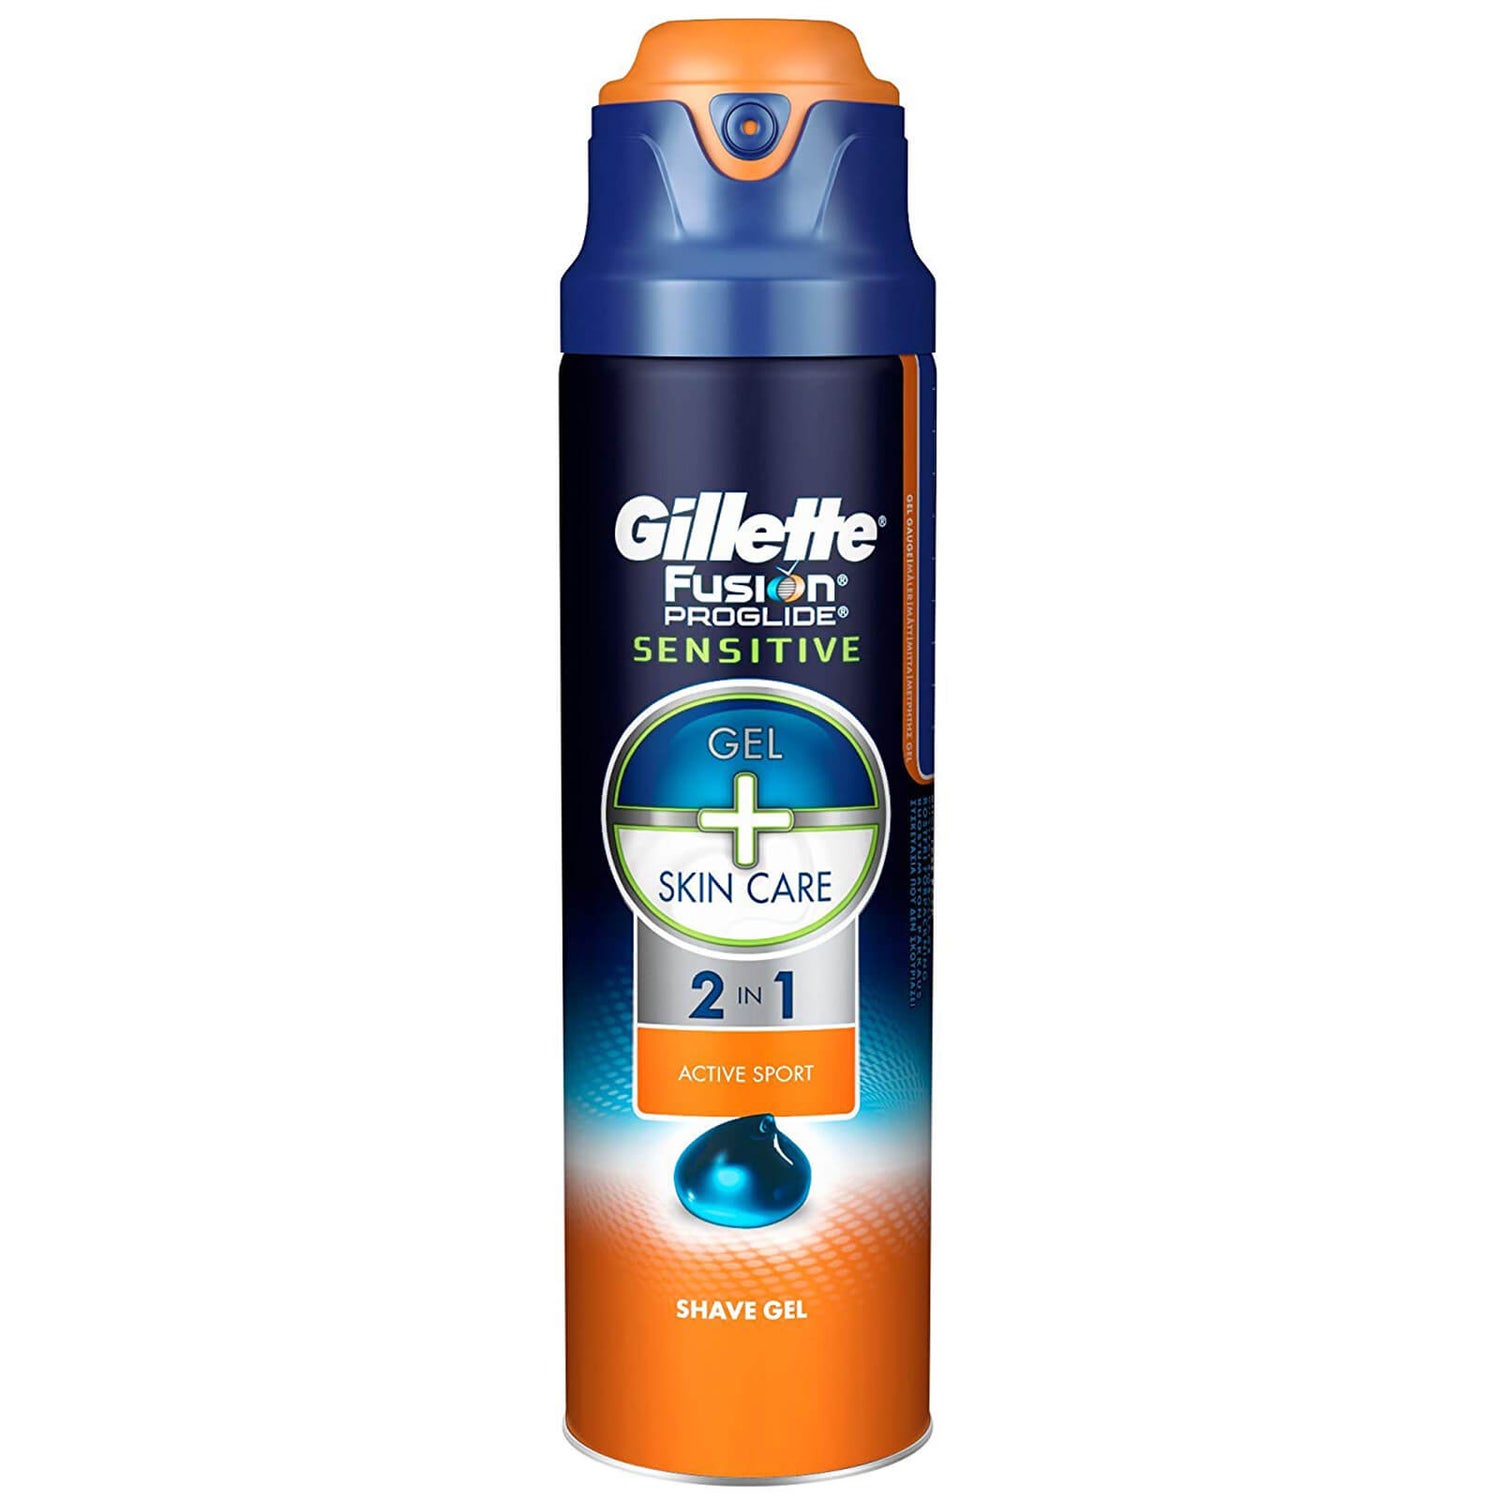 Gillette Fusion5 Proglide Sensitive 2-in-1 Active Sport Shaving Gel 170ml